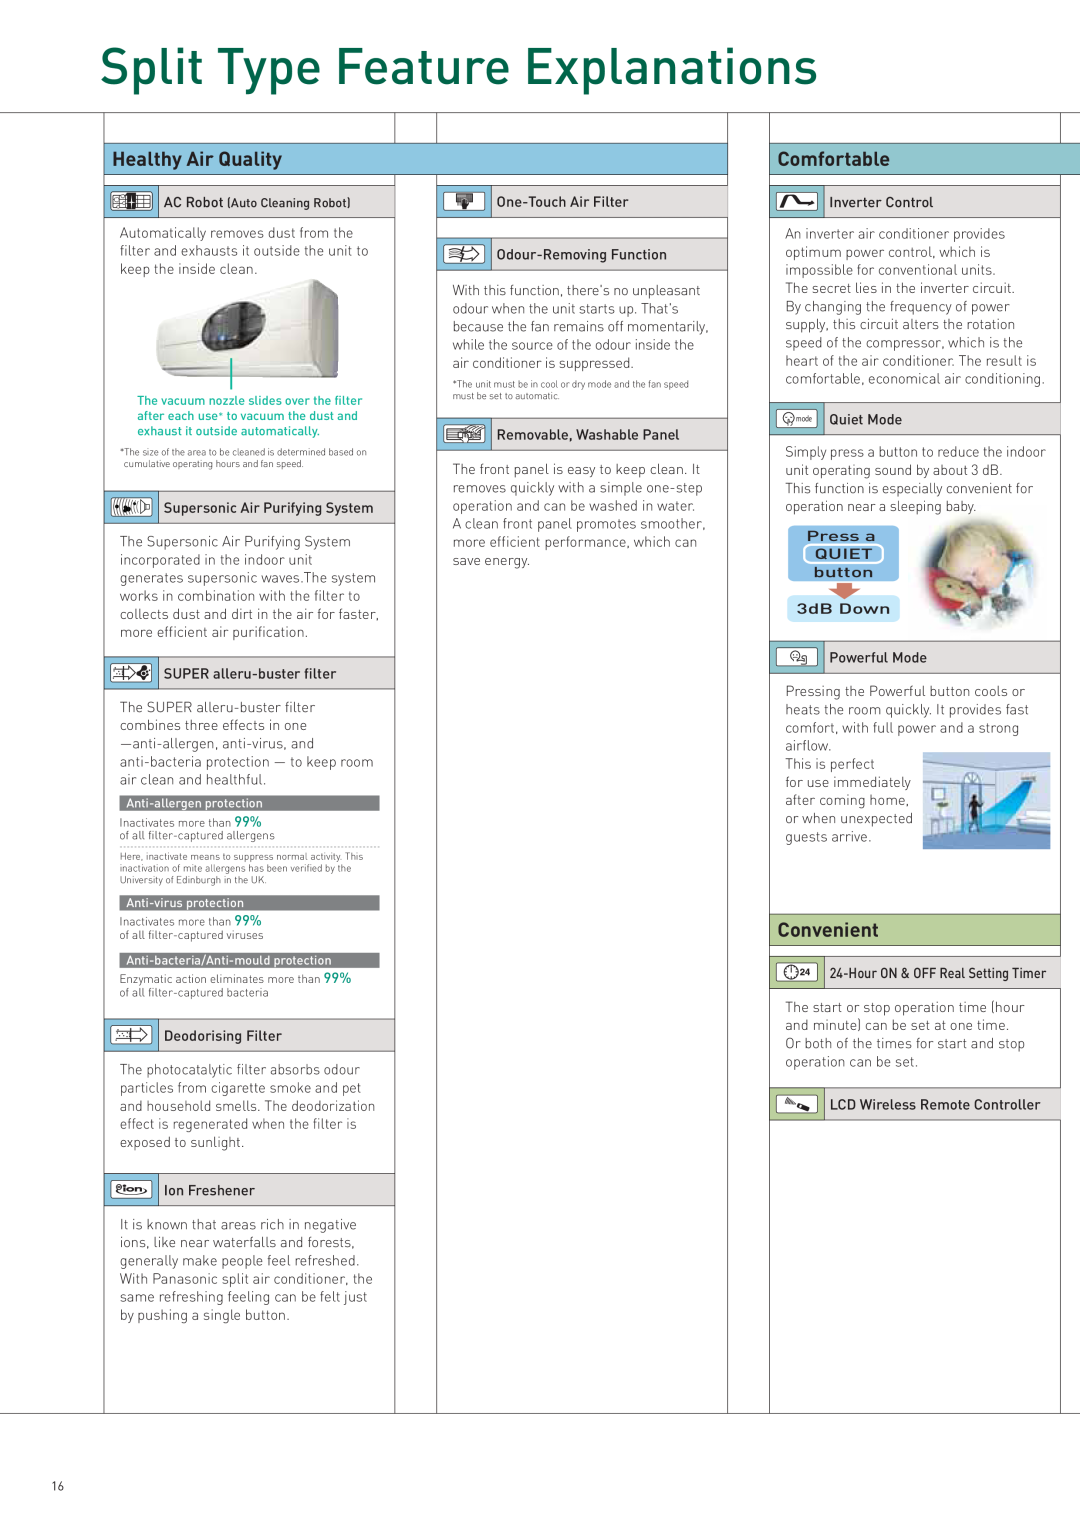 Panasonic 2006/2007 manual Split Type Feature Explanations, Healthy Air Quality, Comfortable, Convenient 